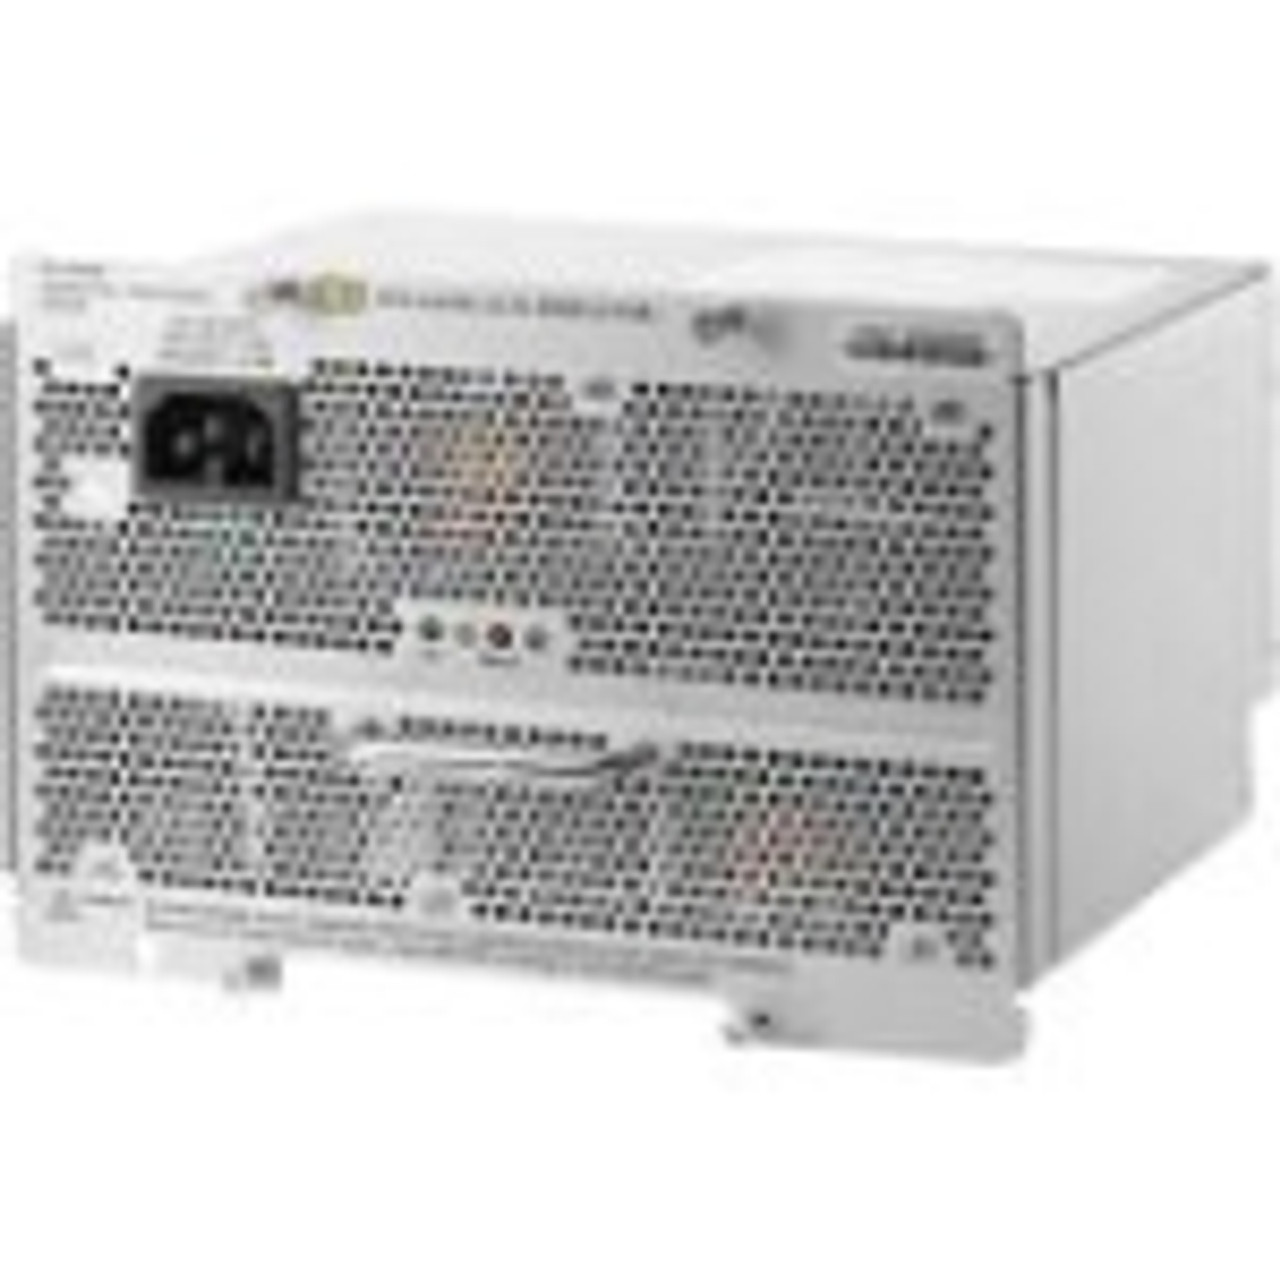 J9829AR HP 1100-Watts Poe+ Power Supply